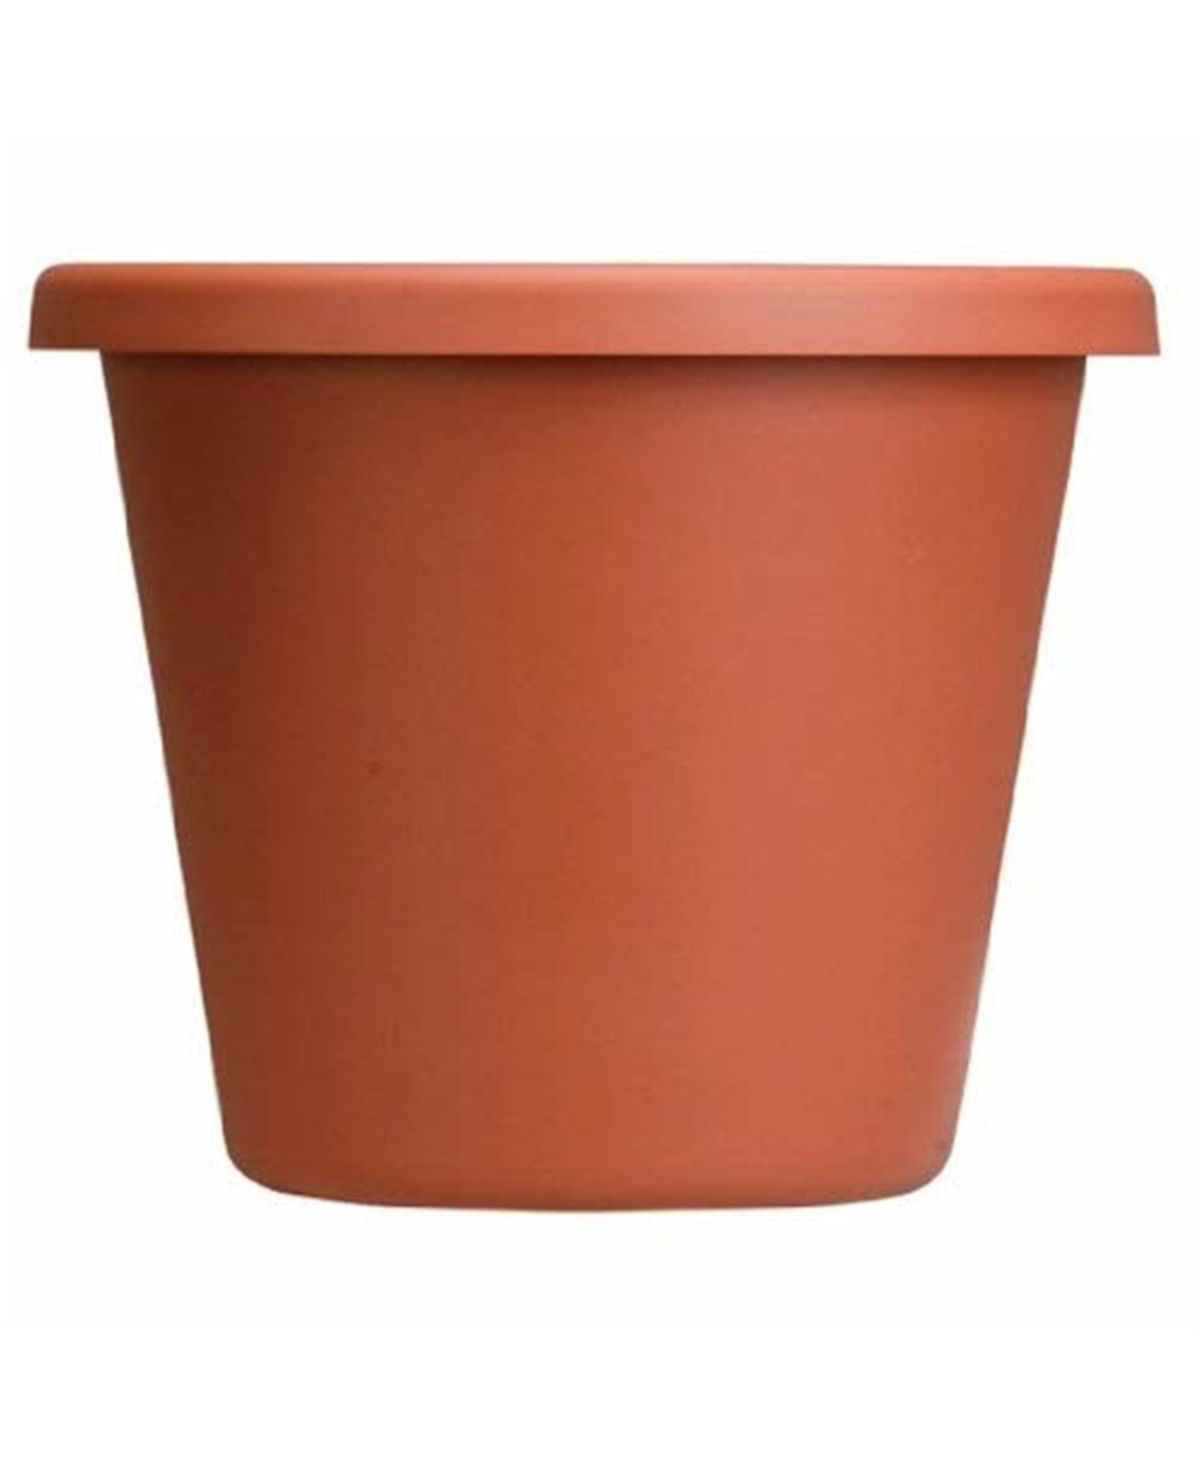 Akro Mils Plastic Classic Pot, Clay Color, 6-Inch